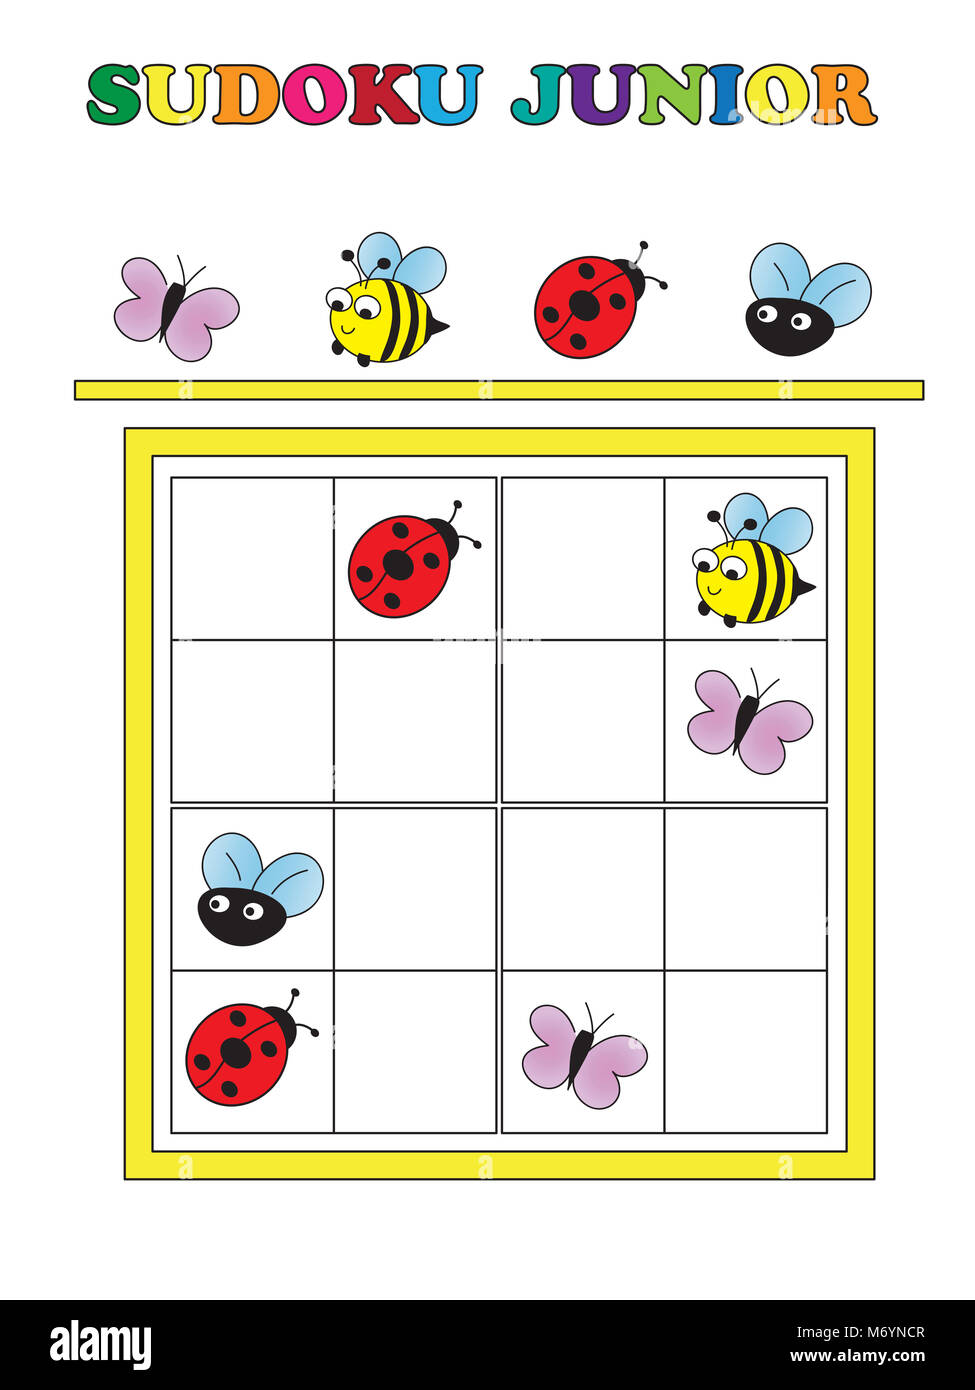 game for children: sudoku game junior Stock Photo - Alamy